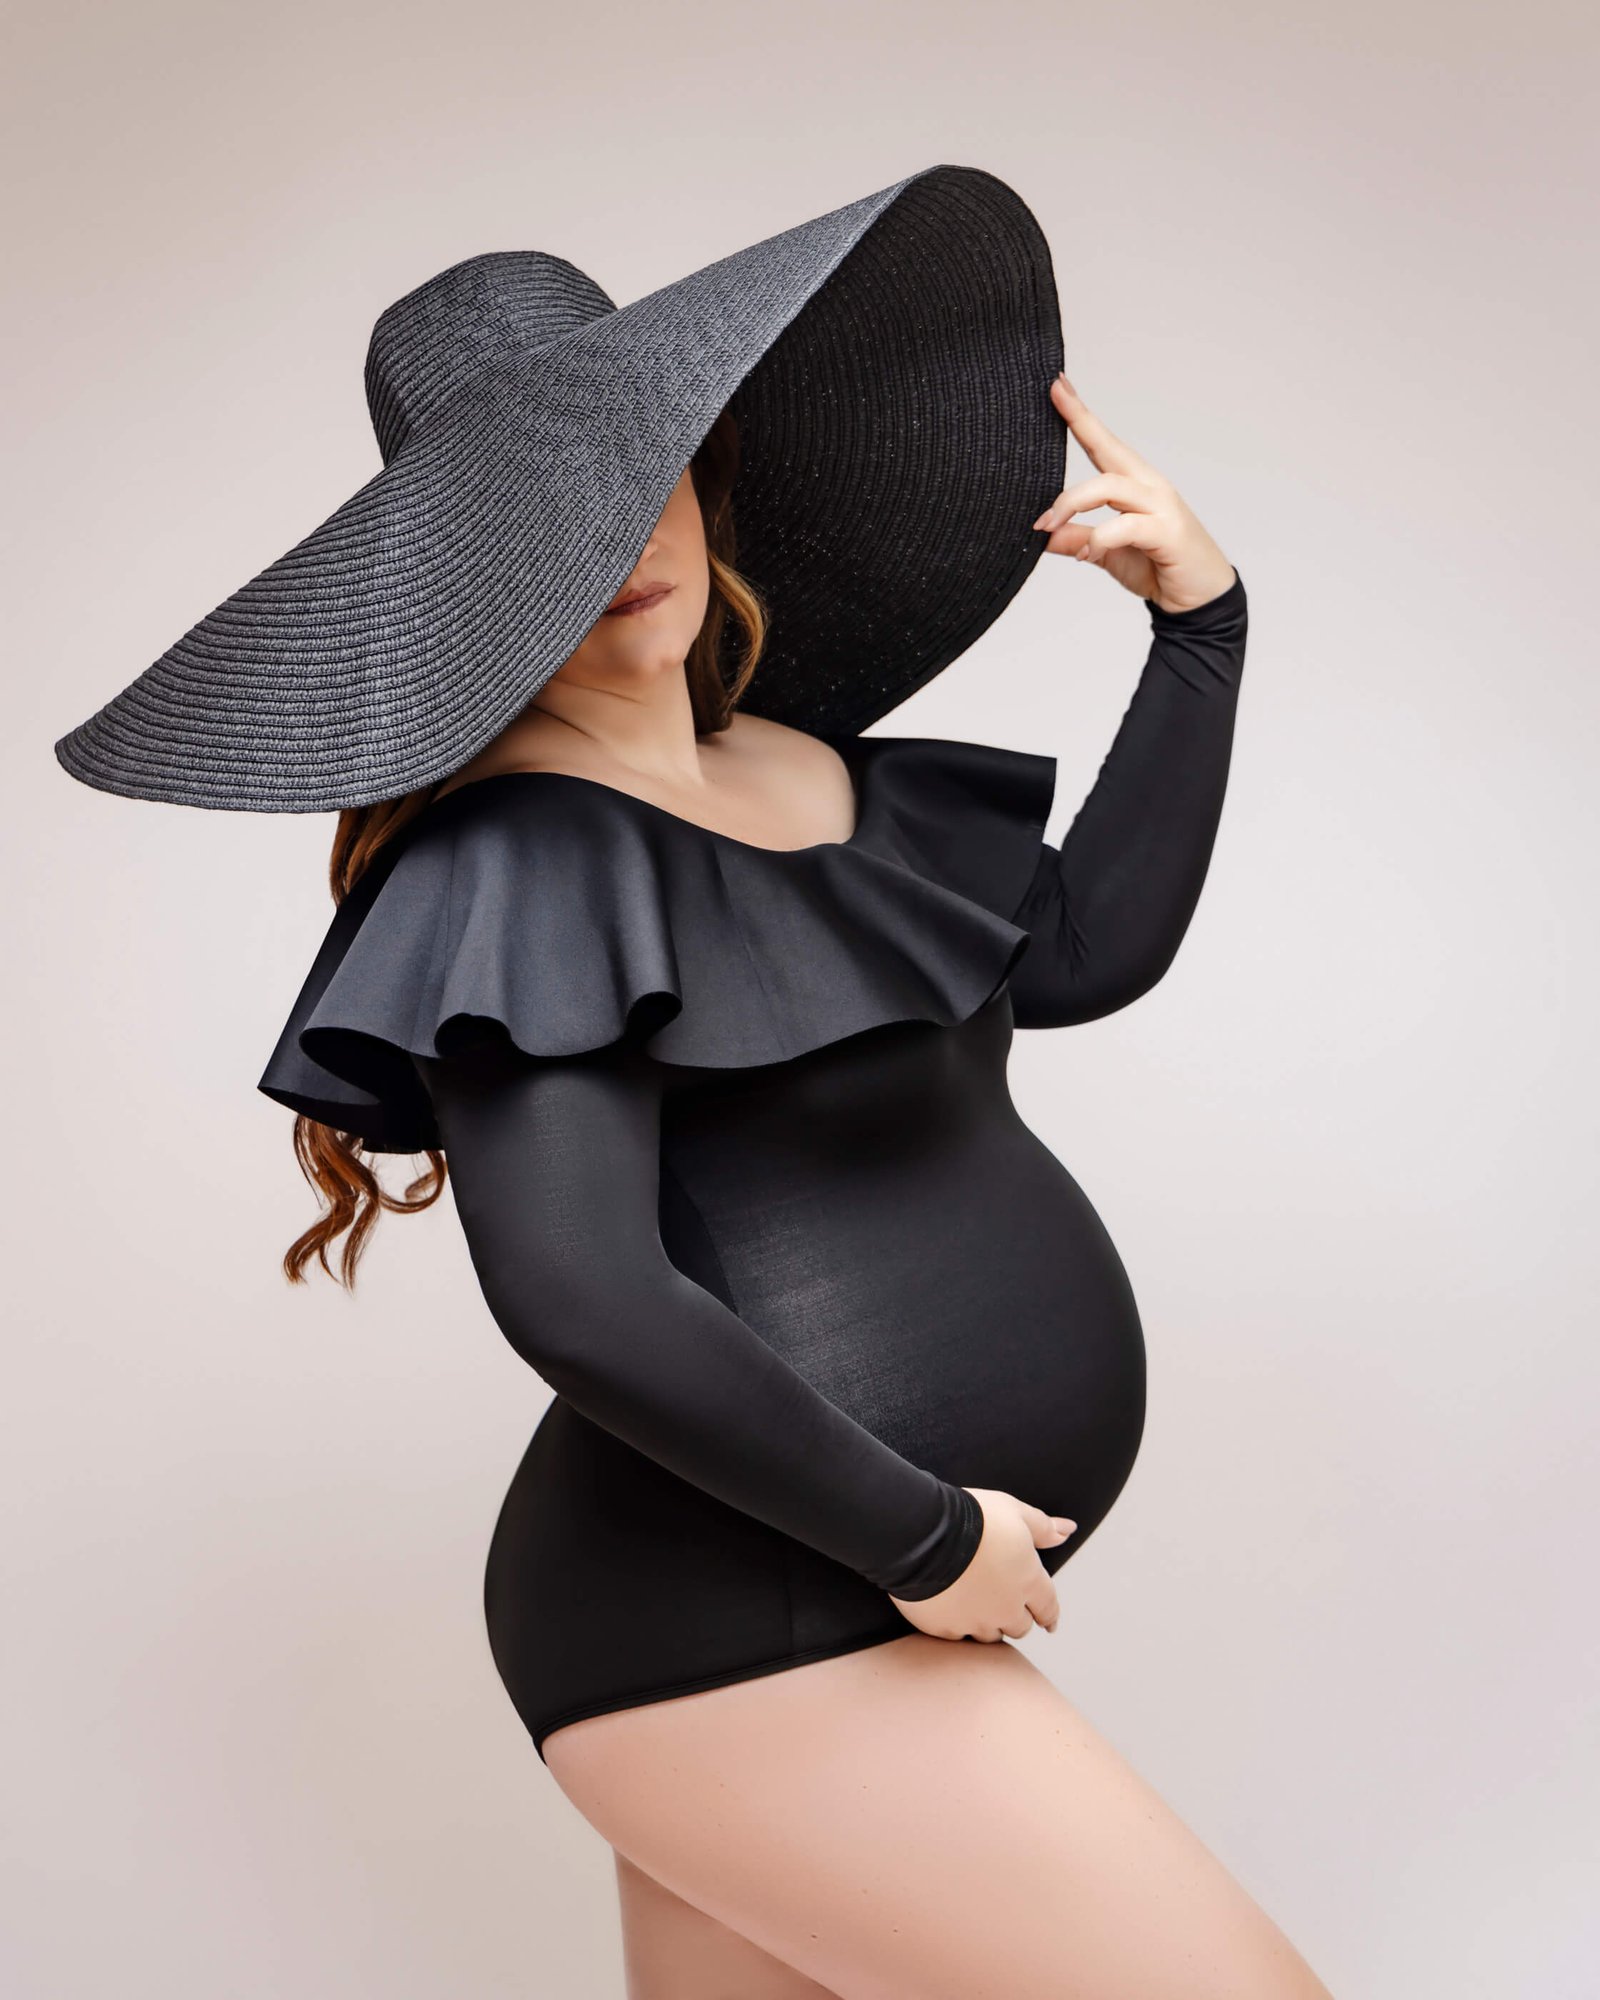 Maternity Studio Glam Beauty Portraits -4